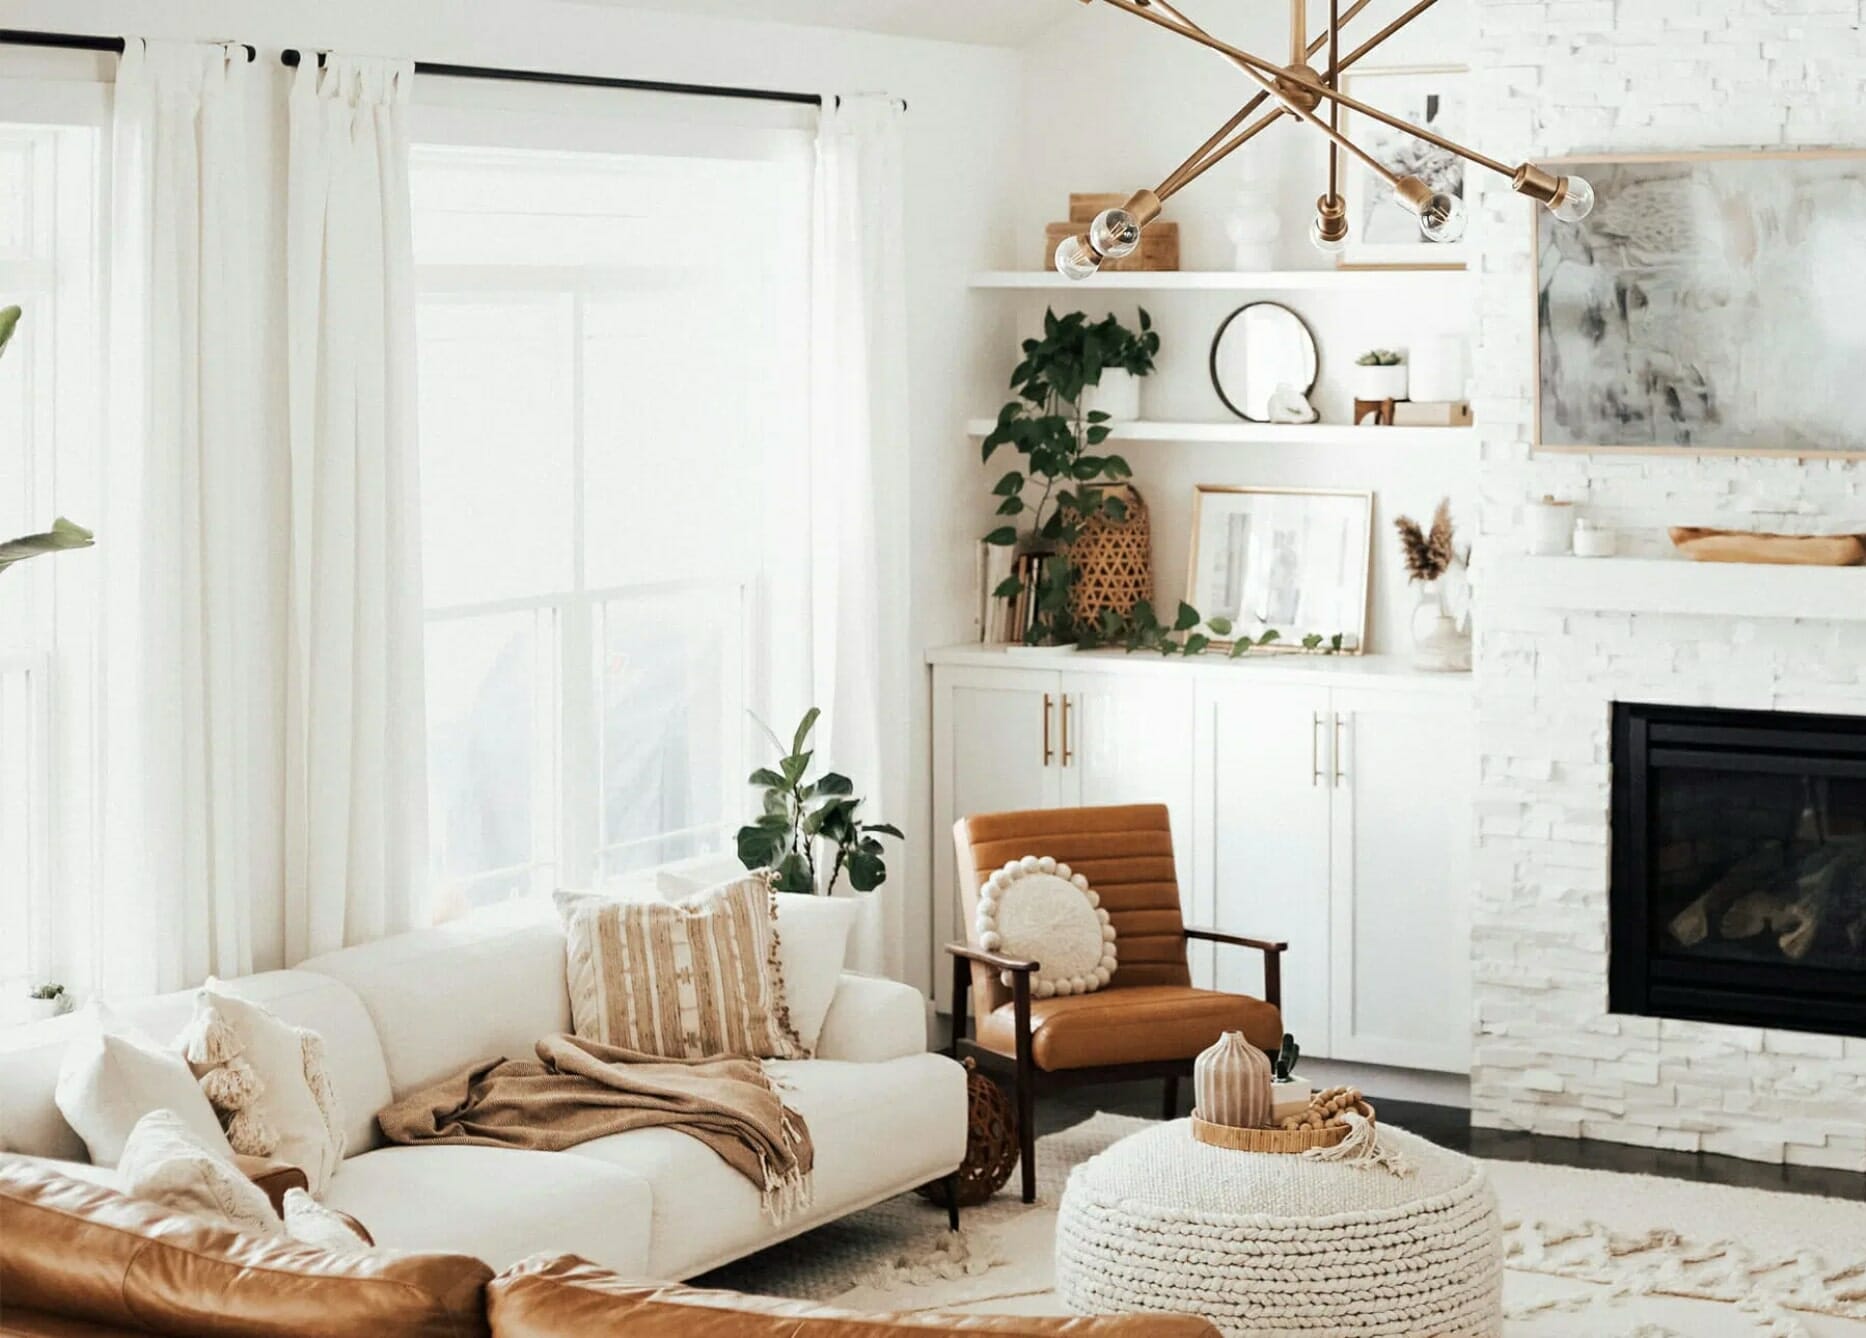 Cozy Bohemian interior design living room - Article